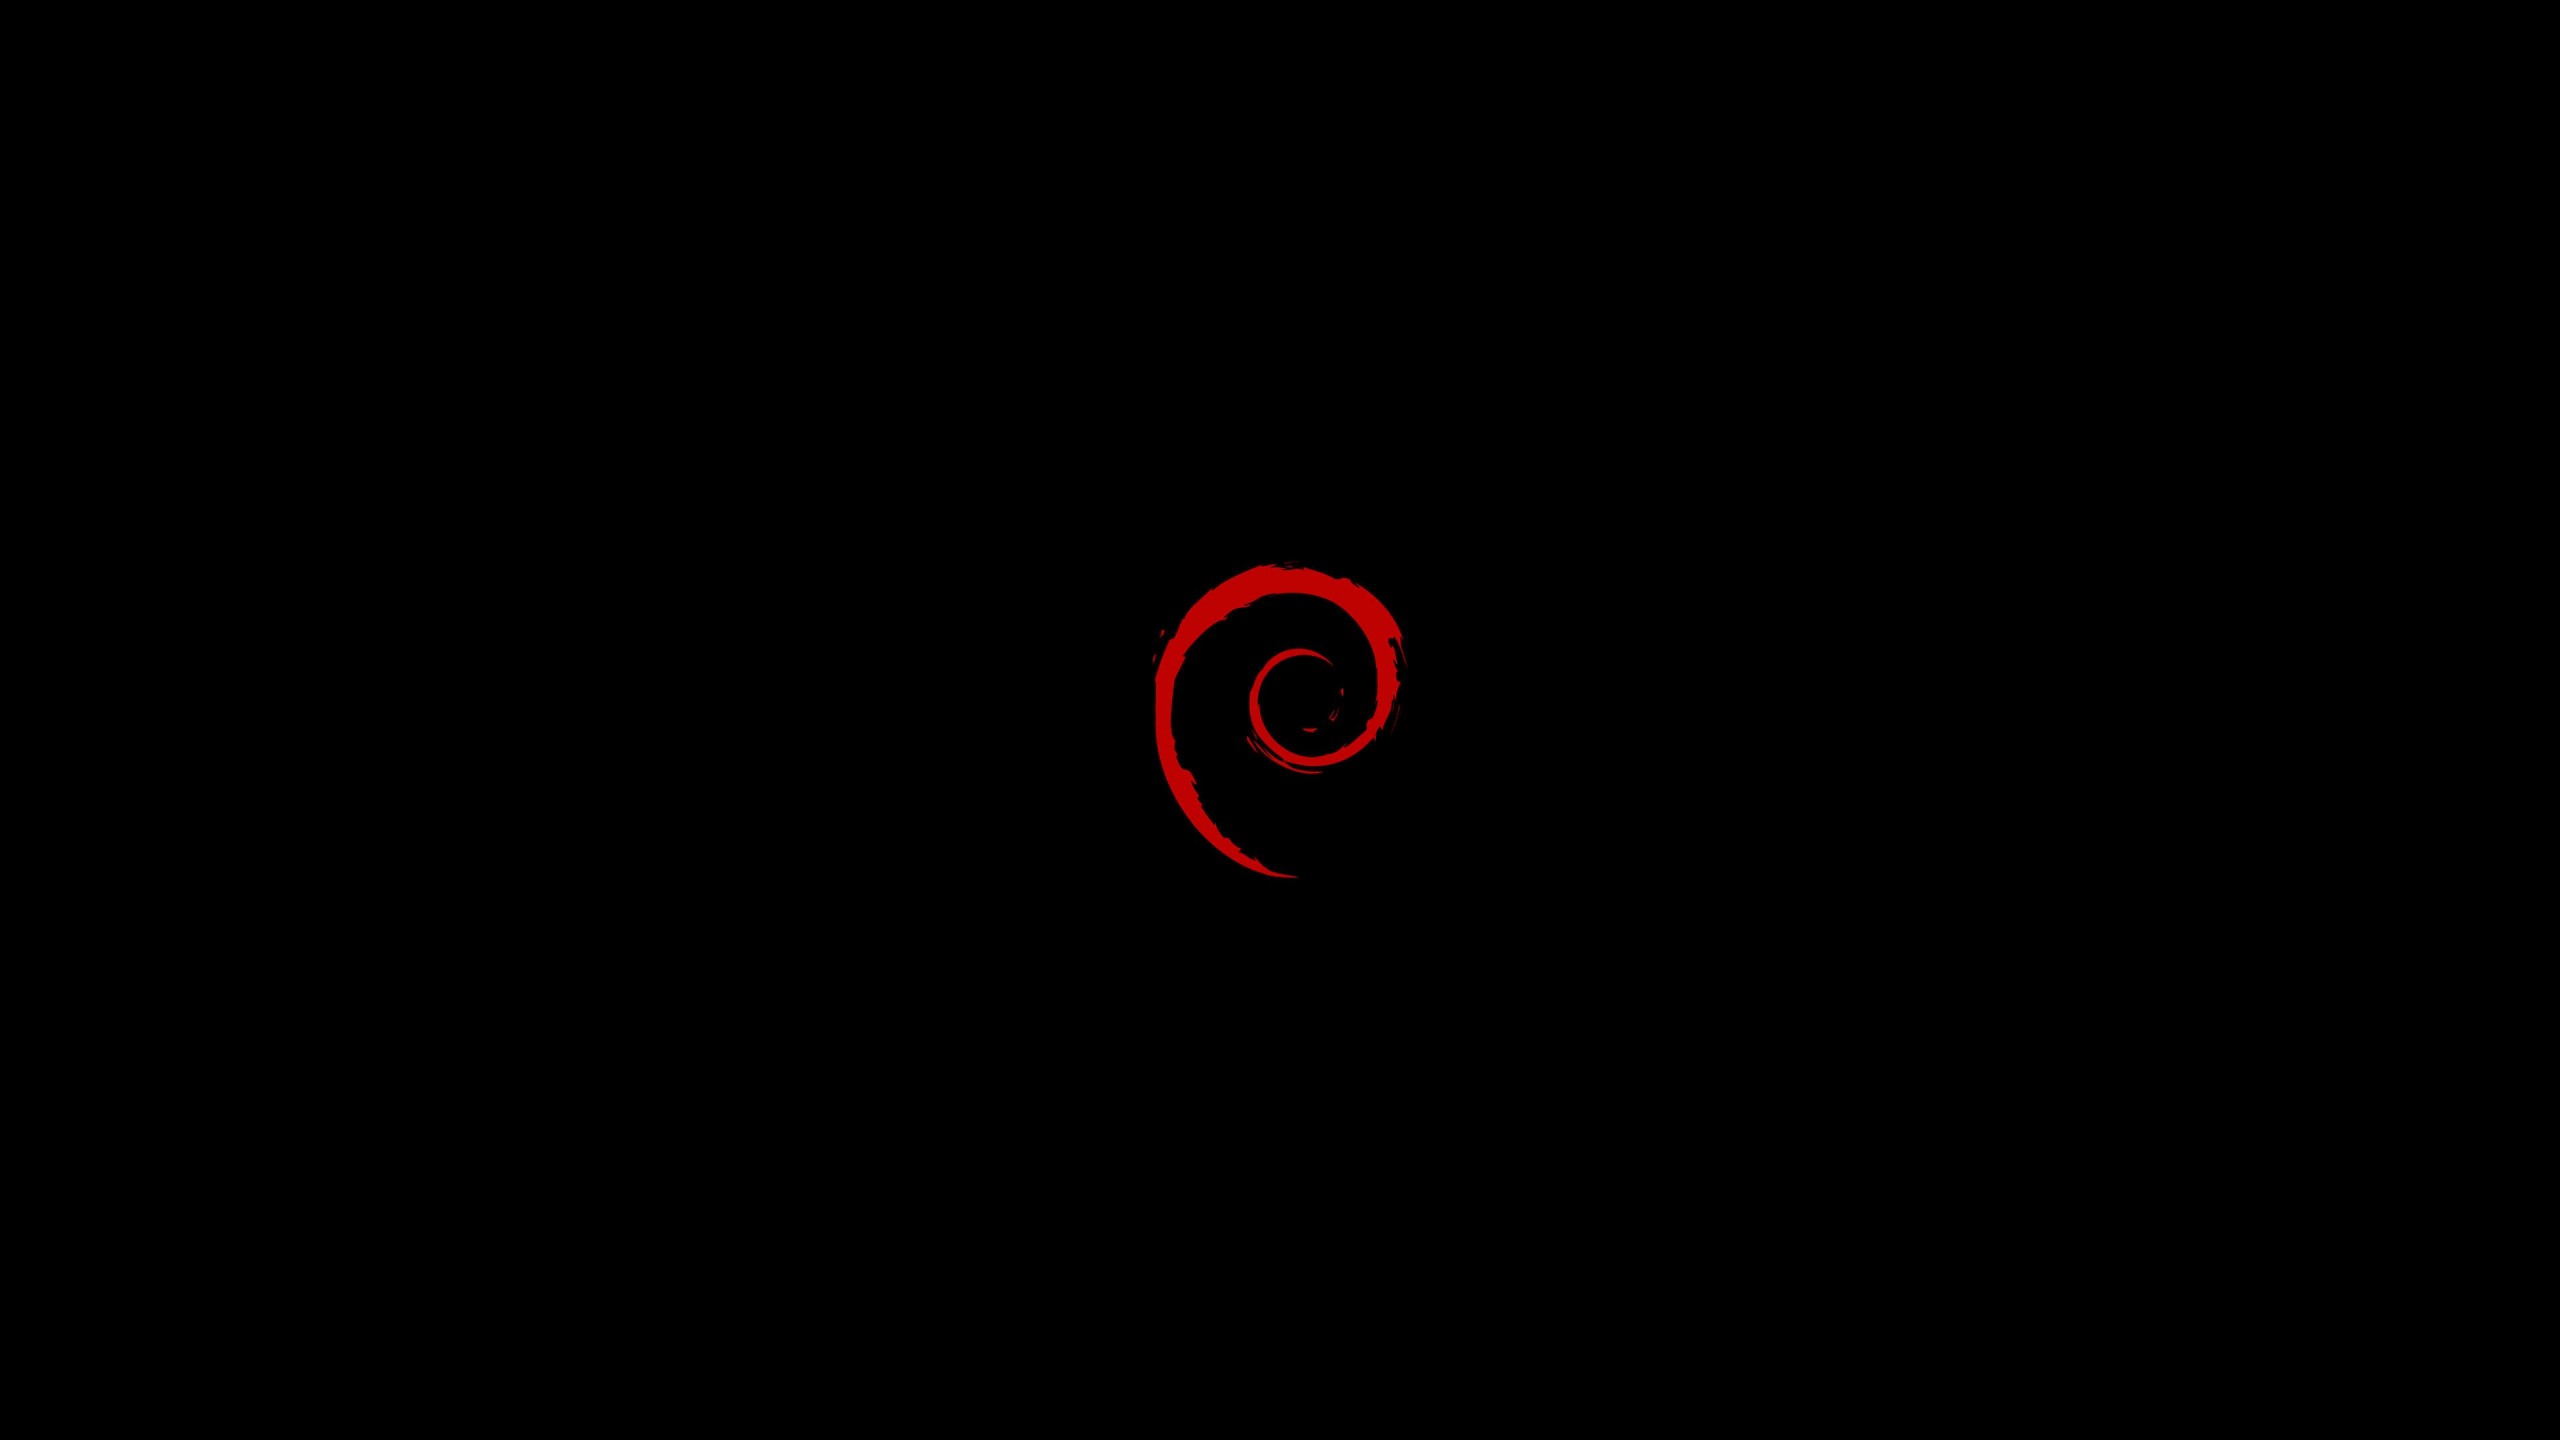 Linux Debian Wallpaper for Social Media YouTube Channel Art